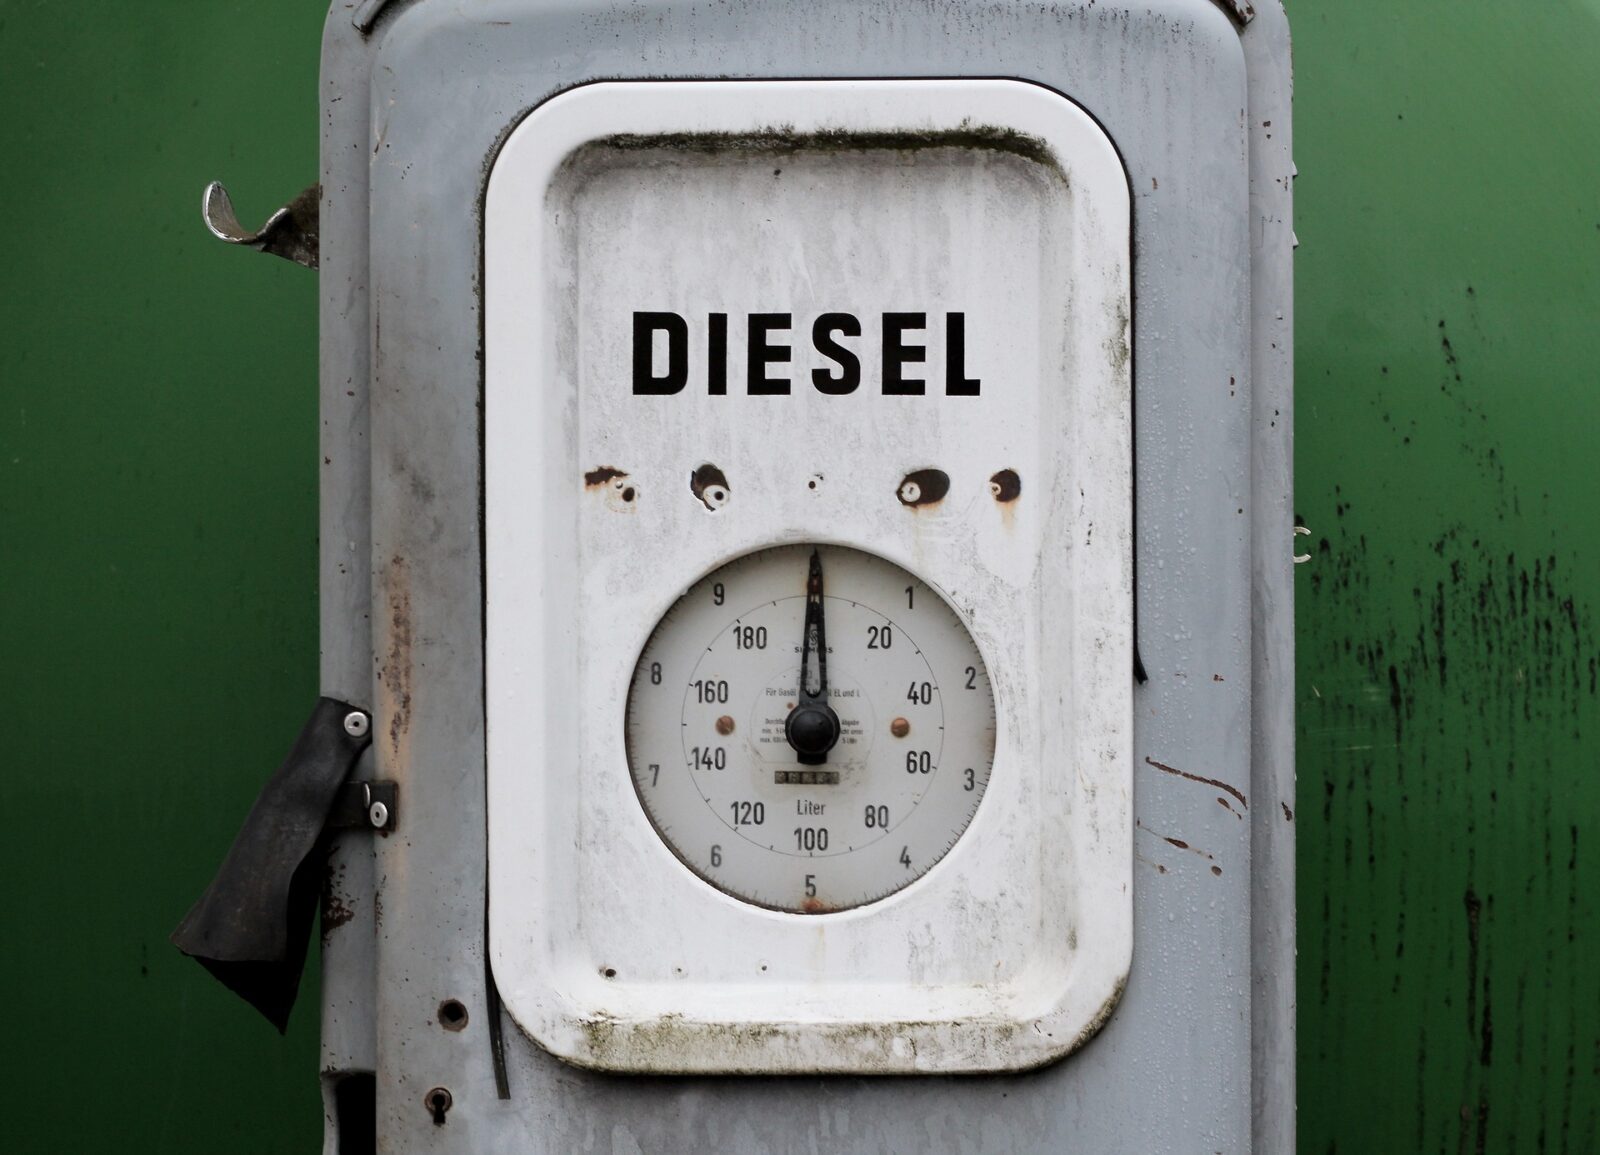 car-diesel-ge3c4bb877_1920 【自動車】ディーゼル車だけど燃料凍ったんだが